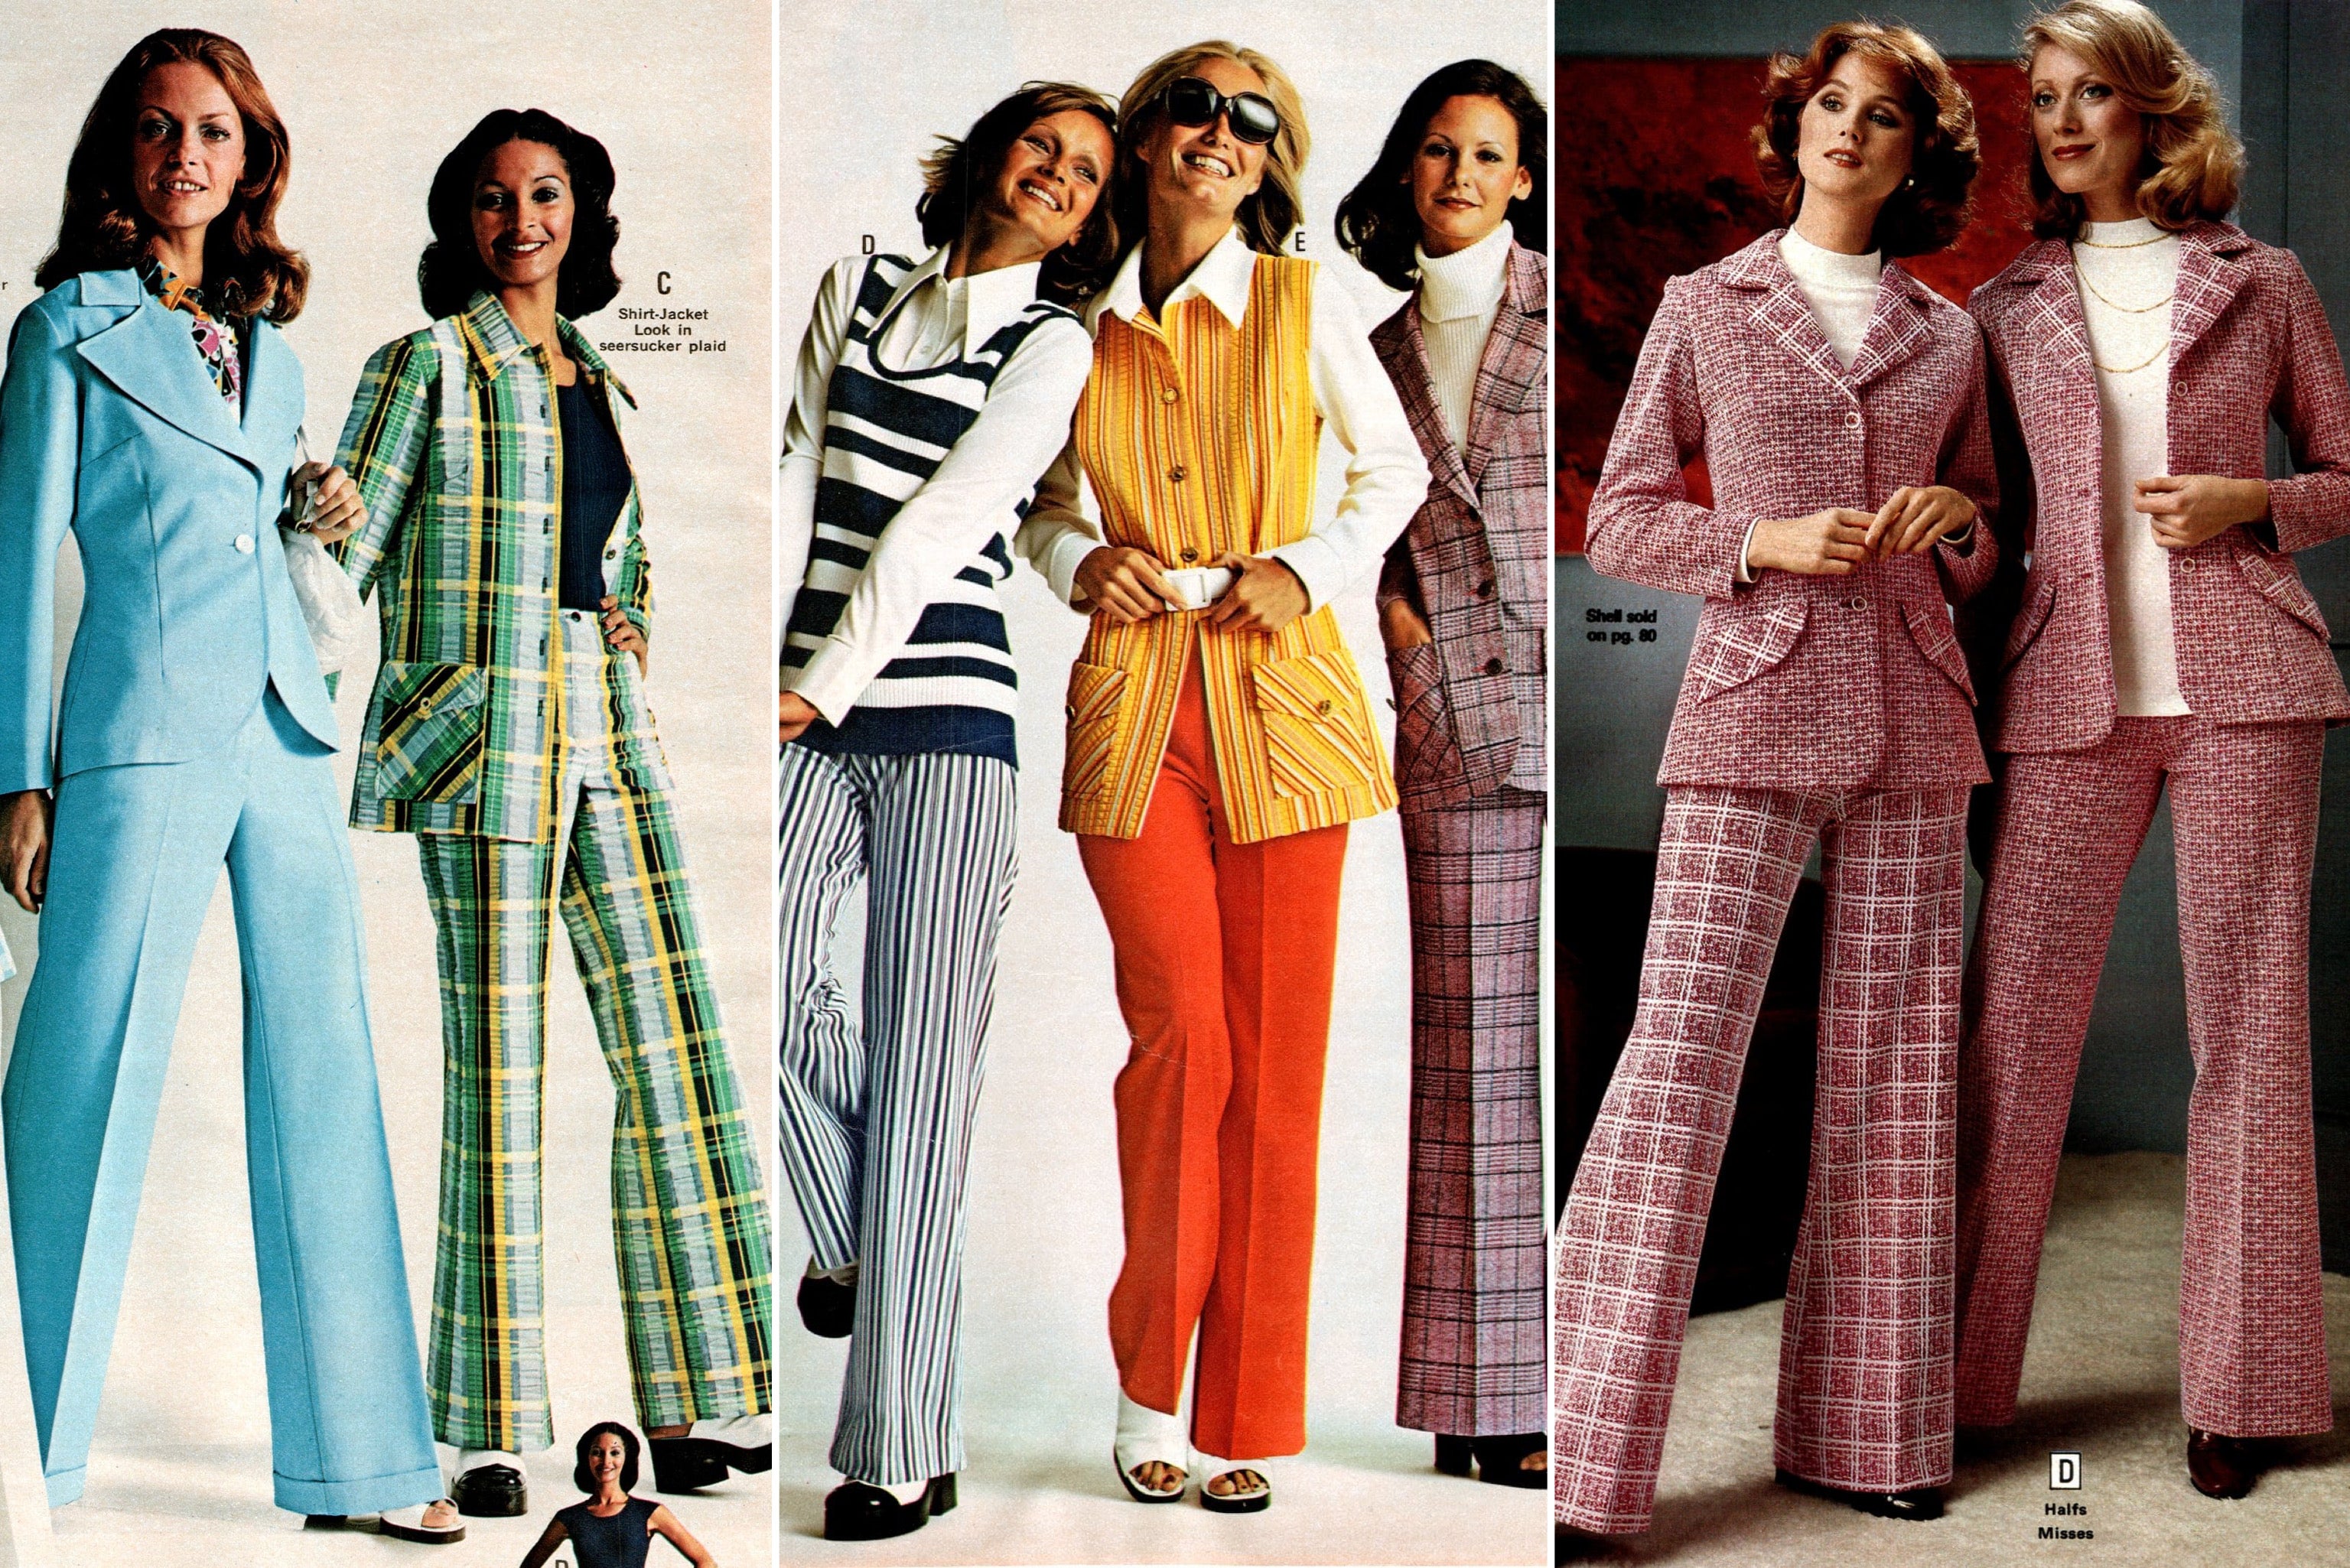 Leopard Print Tights- ladies vintage retro 60s – 70s style – Mod Shoes